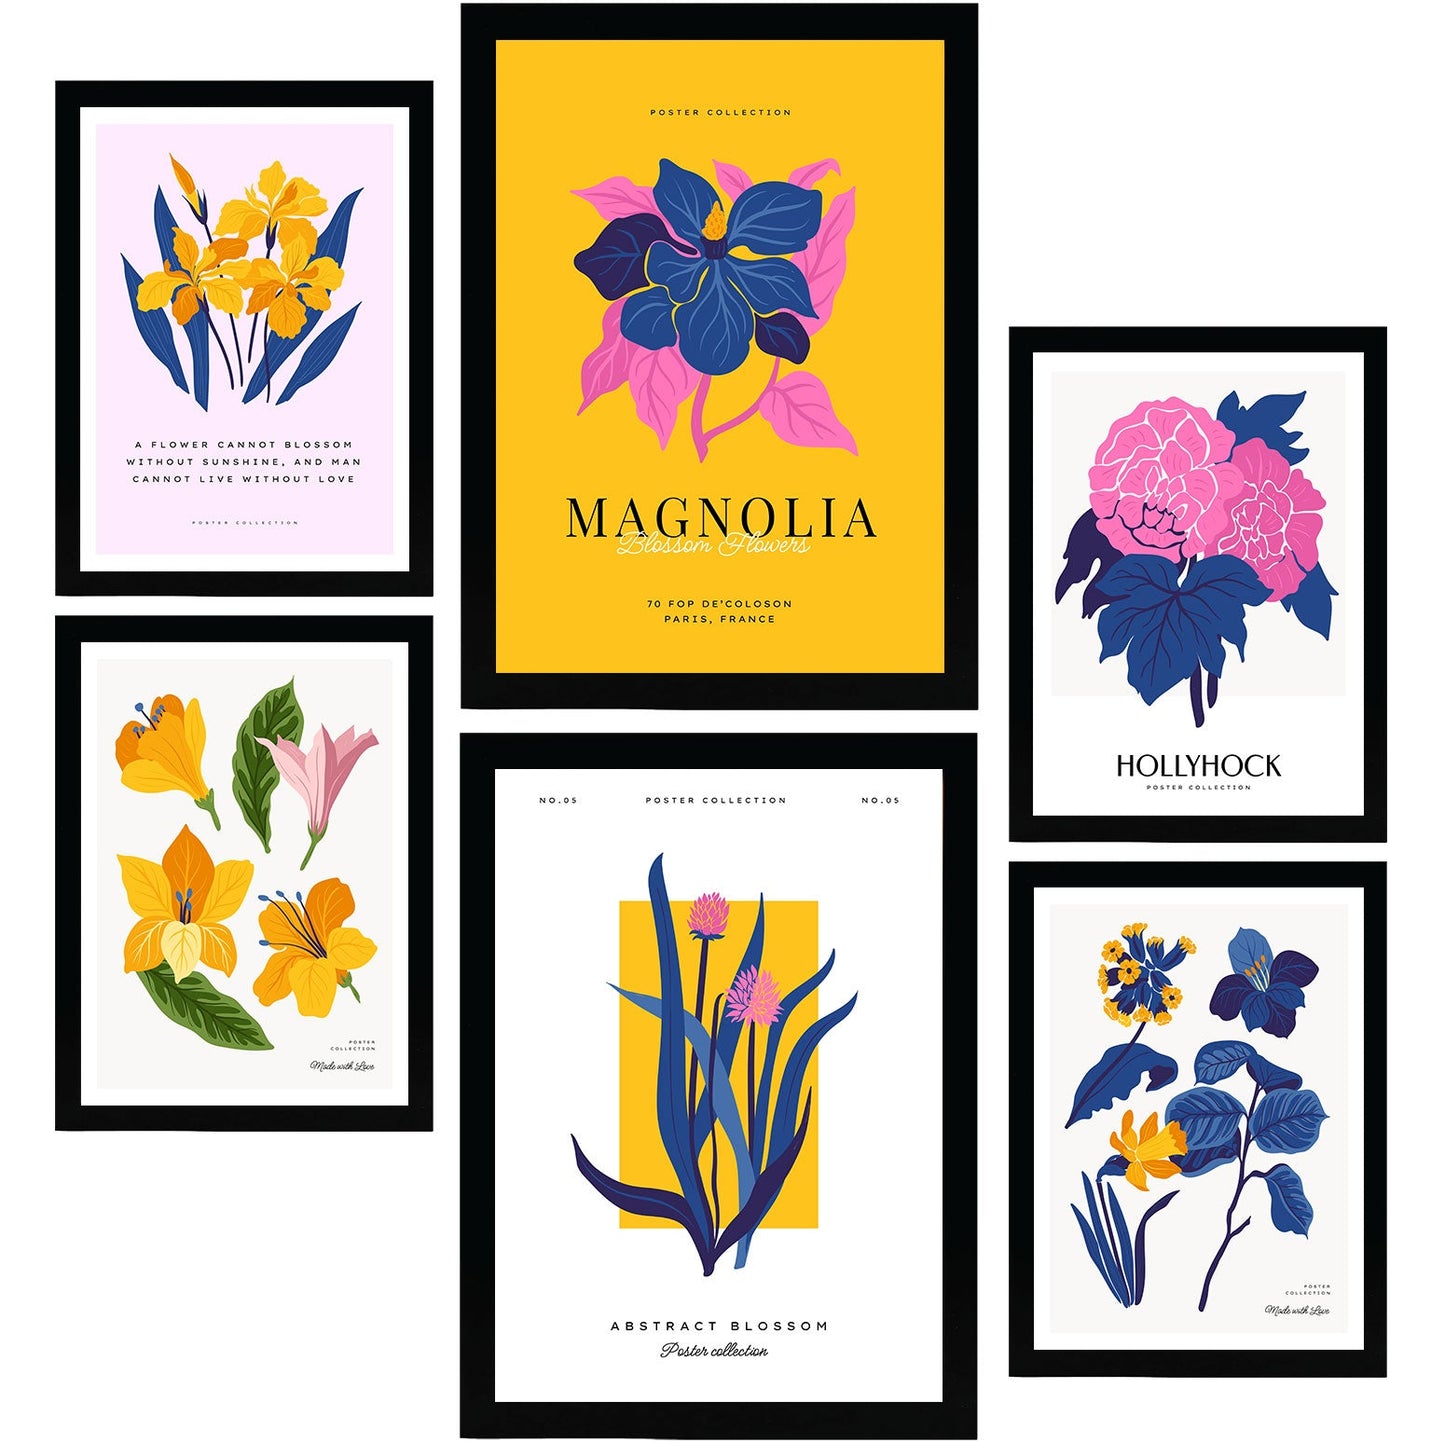 Flower Posters. Magnolia Petals. Nature and Botany-Artwork-Nacnic-Nacnic Estudio SL